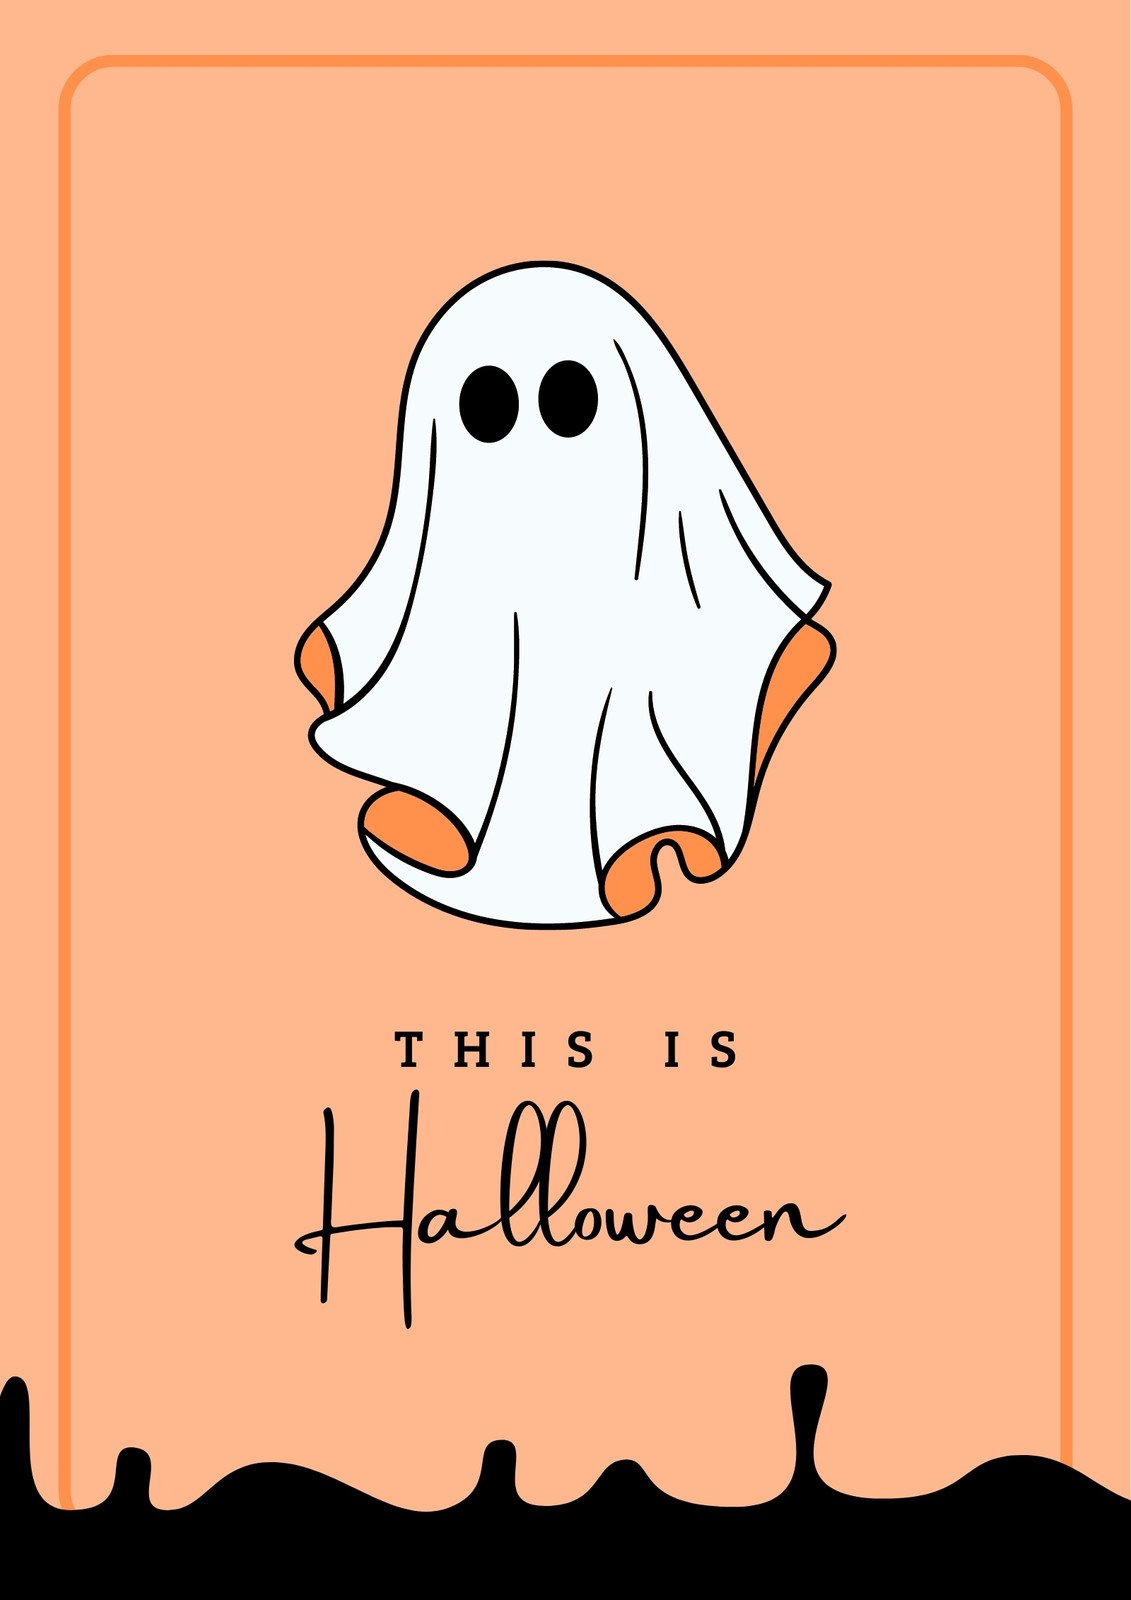 Free Custom Printable Halloween Poster Templates | Canva